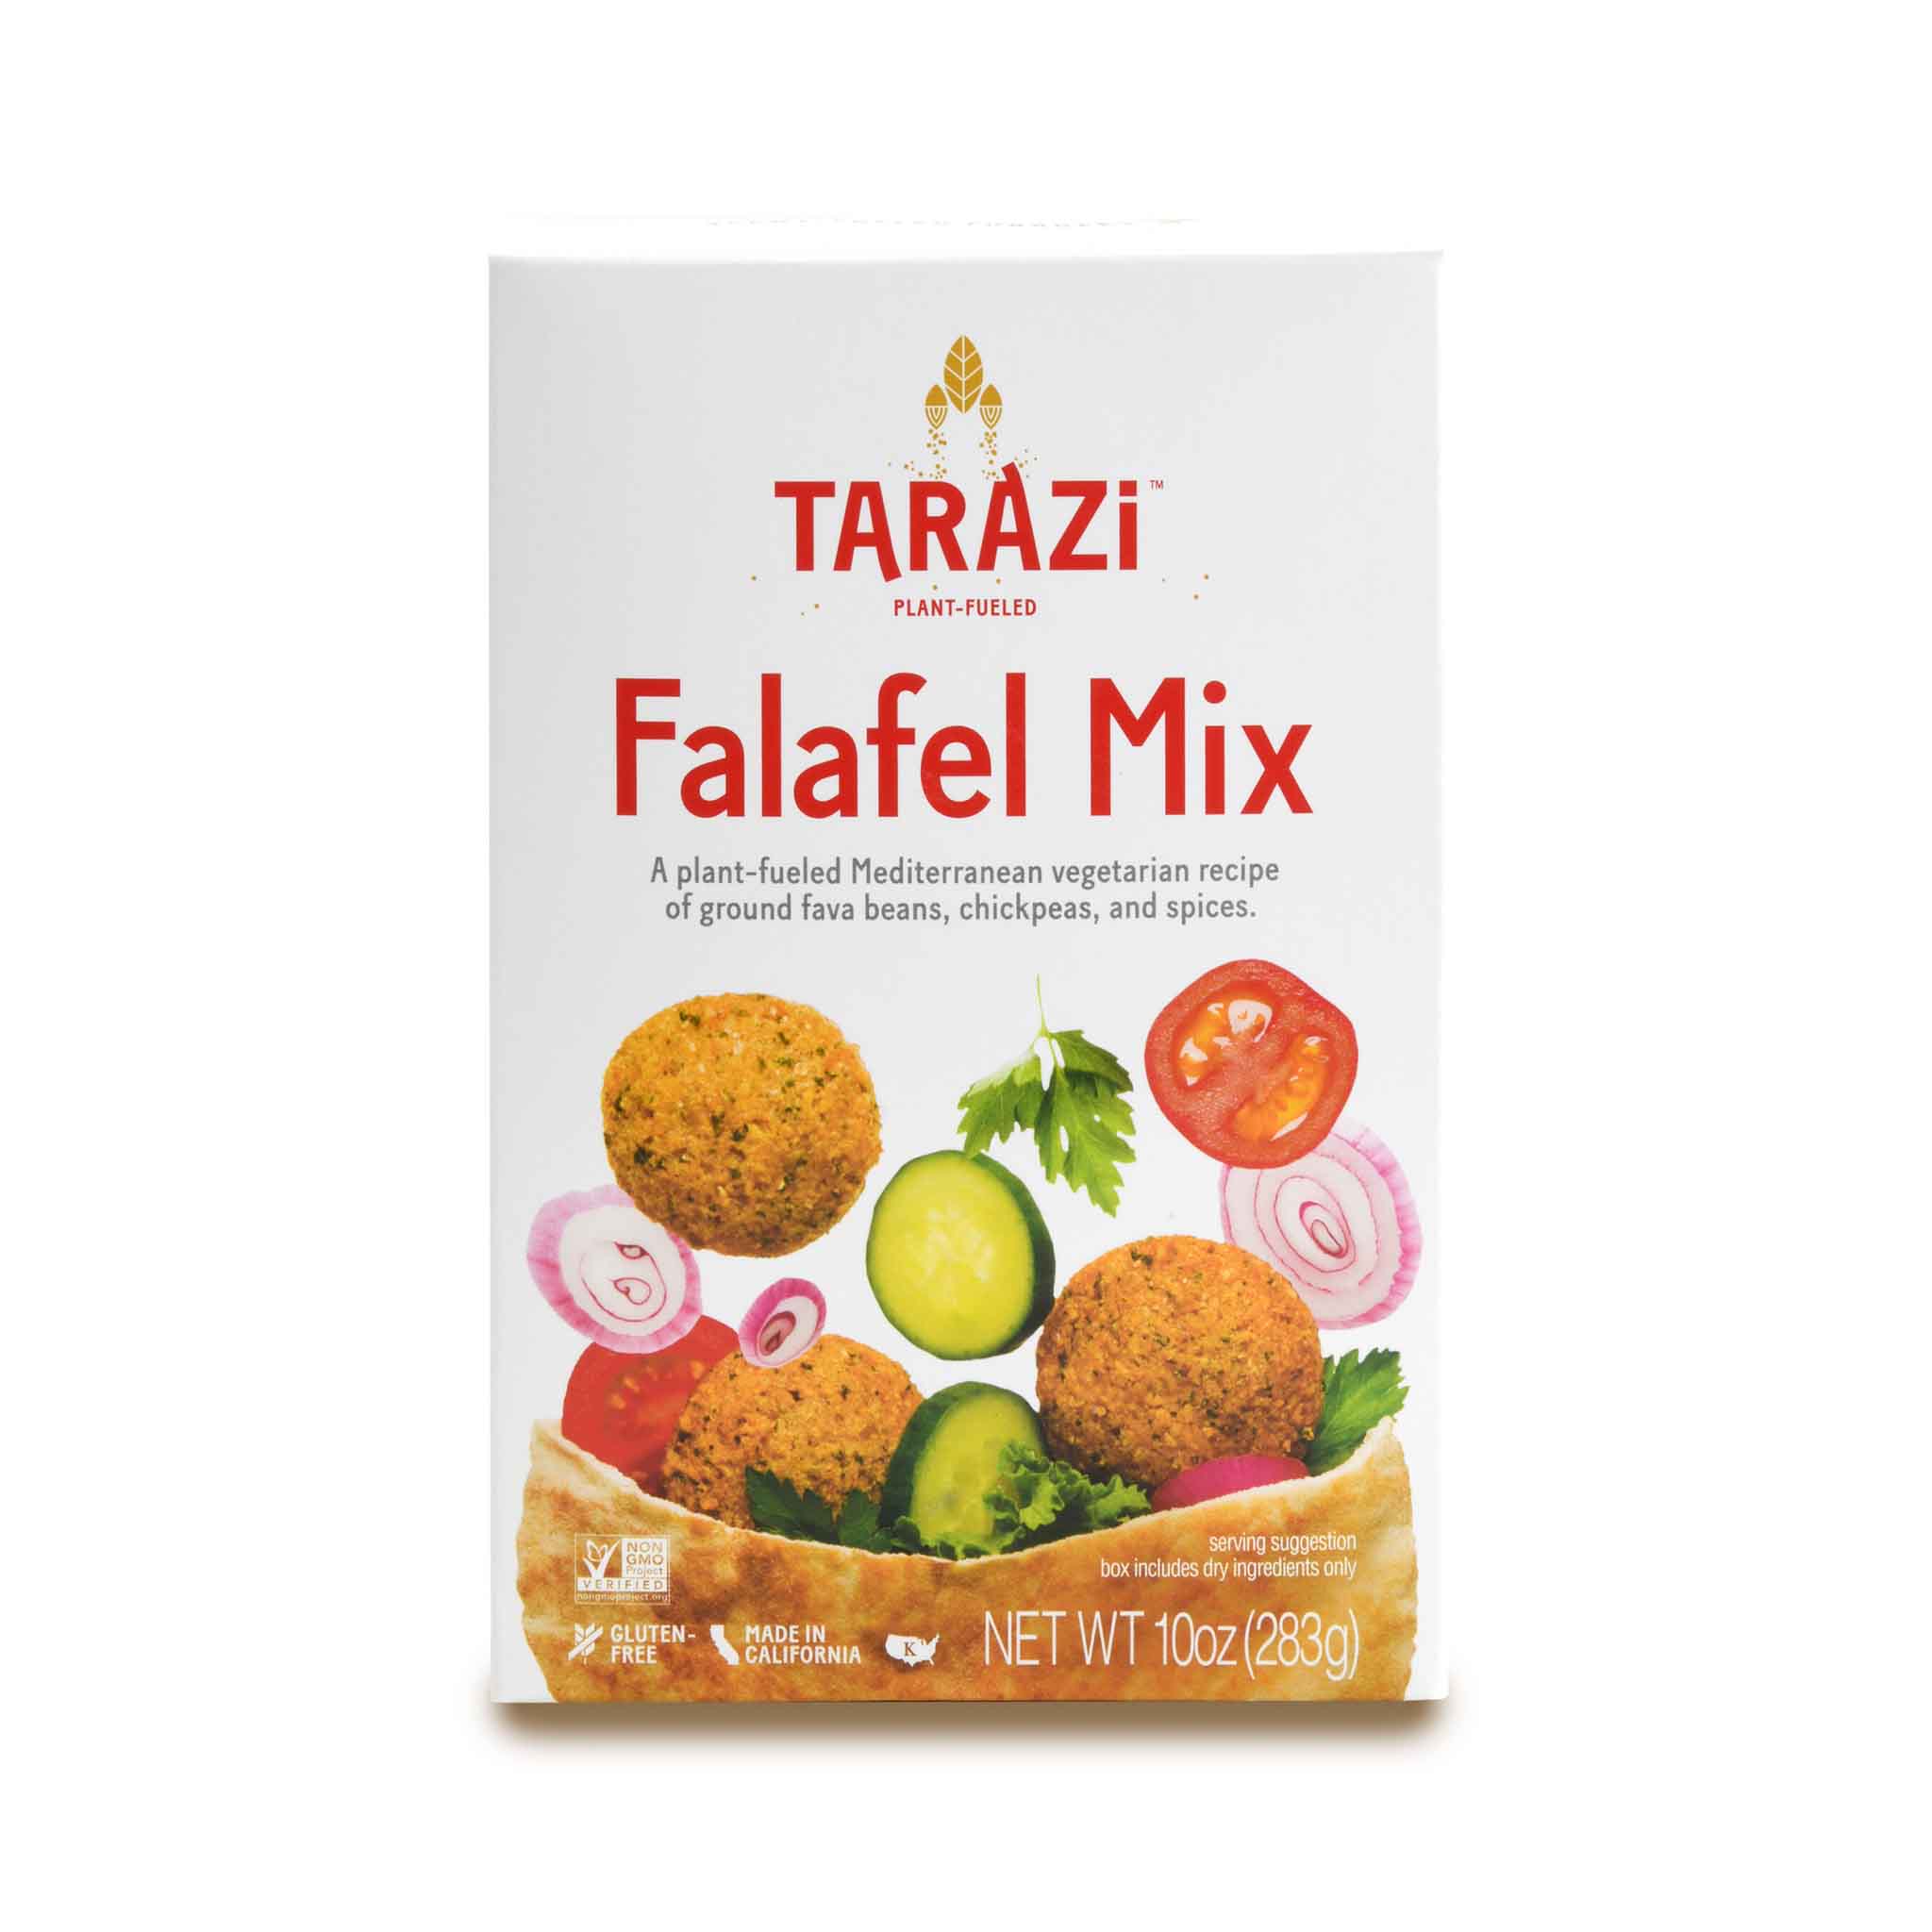 Tarazi Falafel Mix in a Box